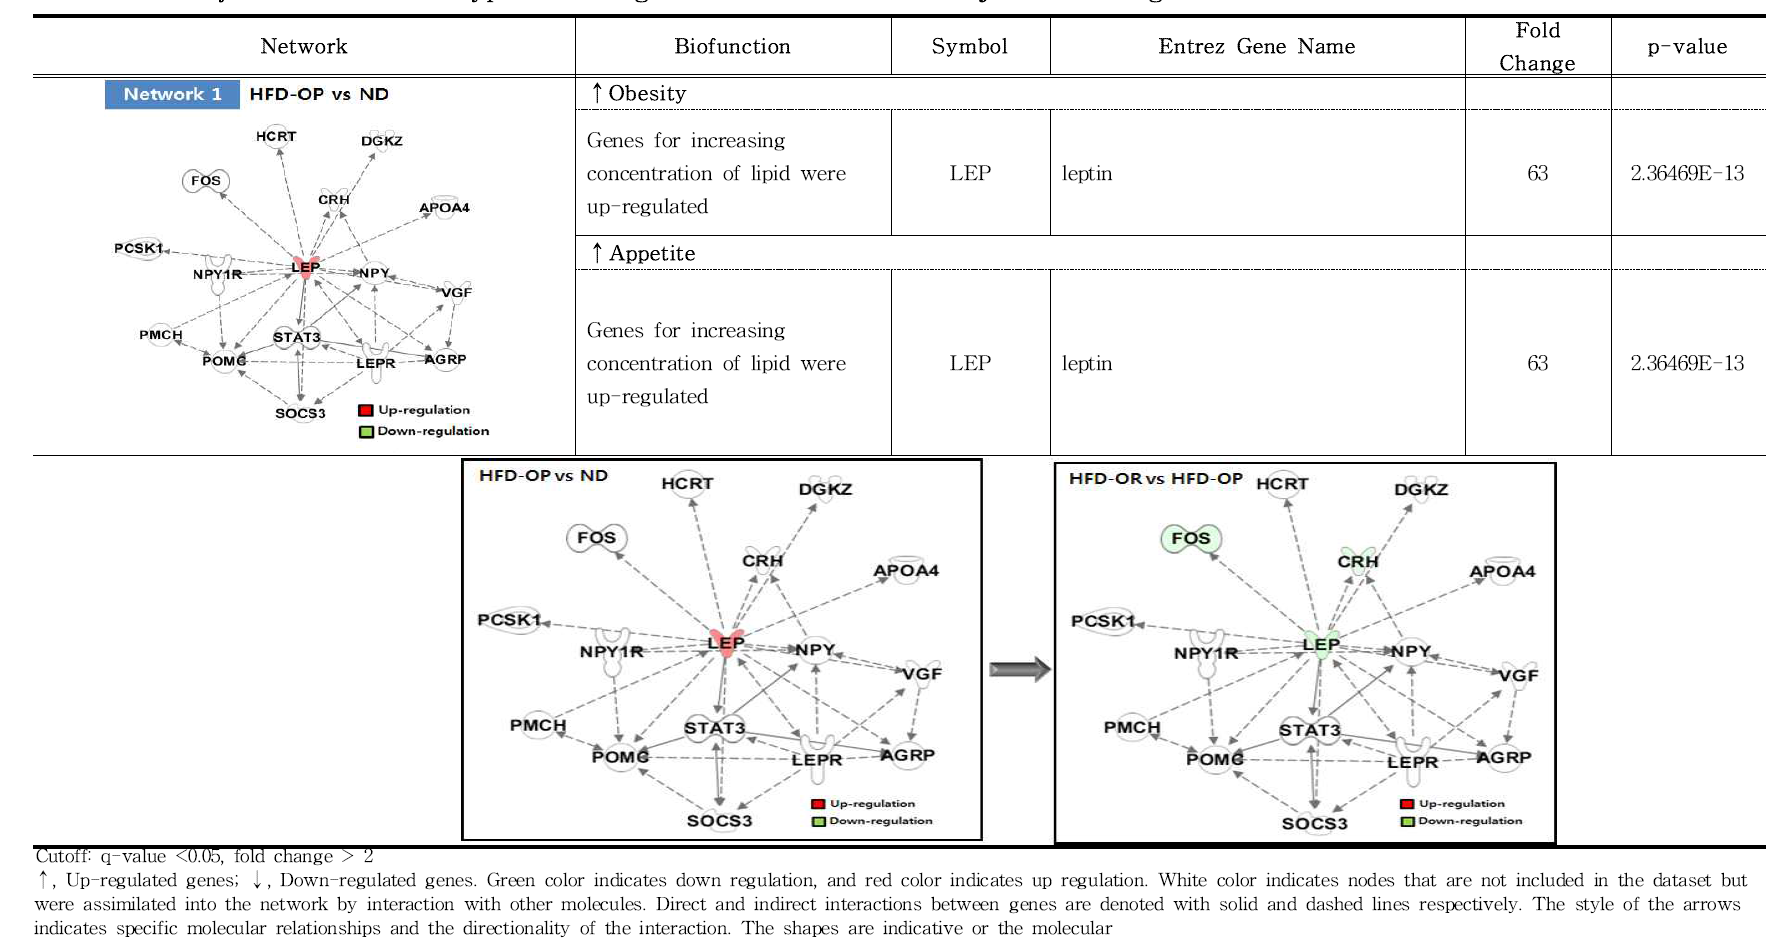 Major biofunction in hypothalamic gene network1 of C57BL/6J mice fed high-fat diet